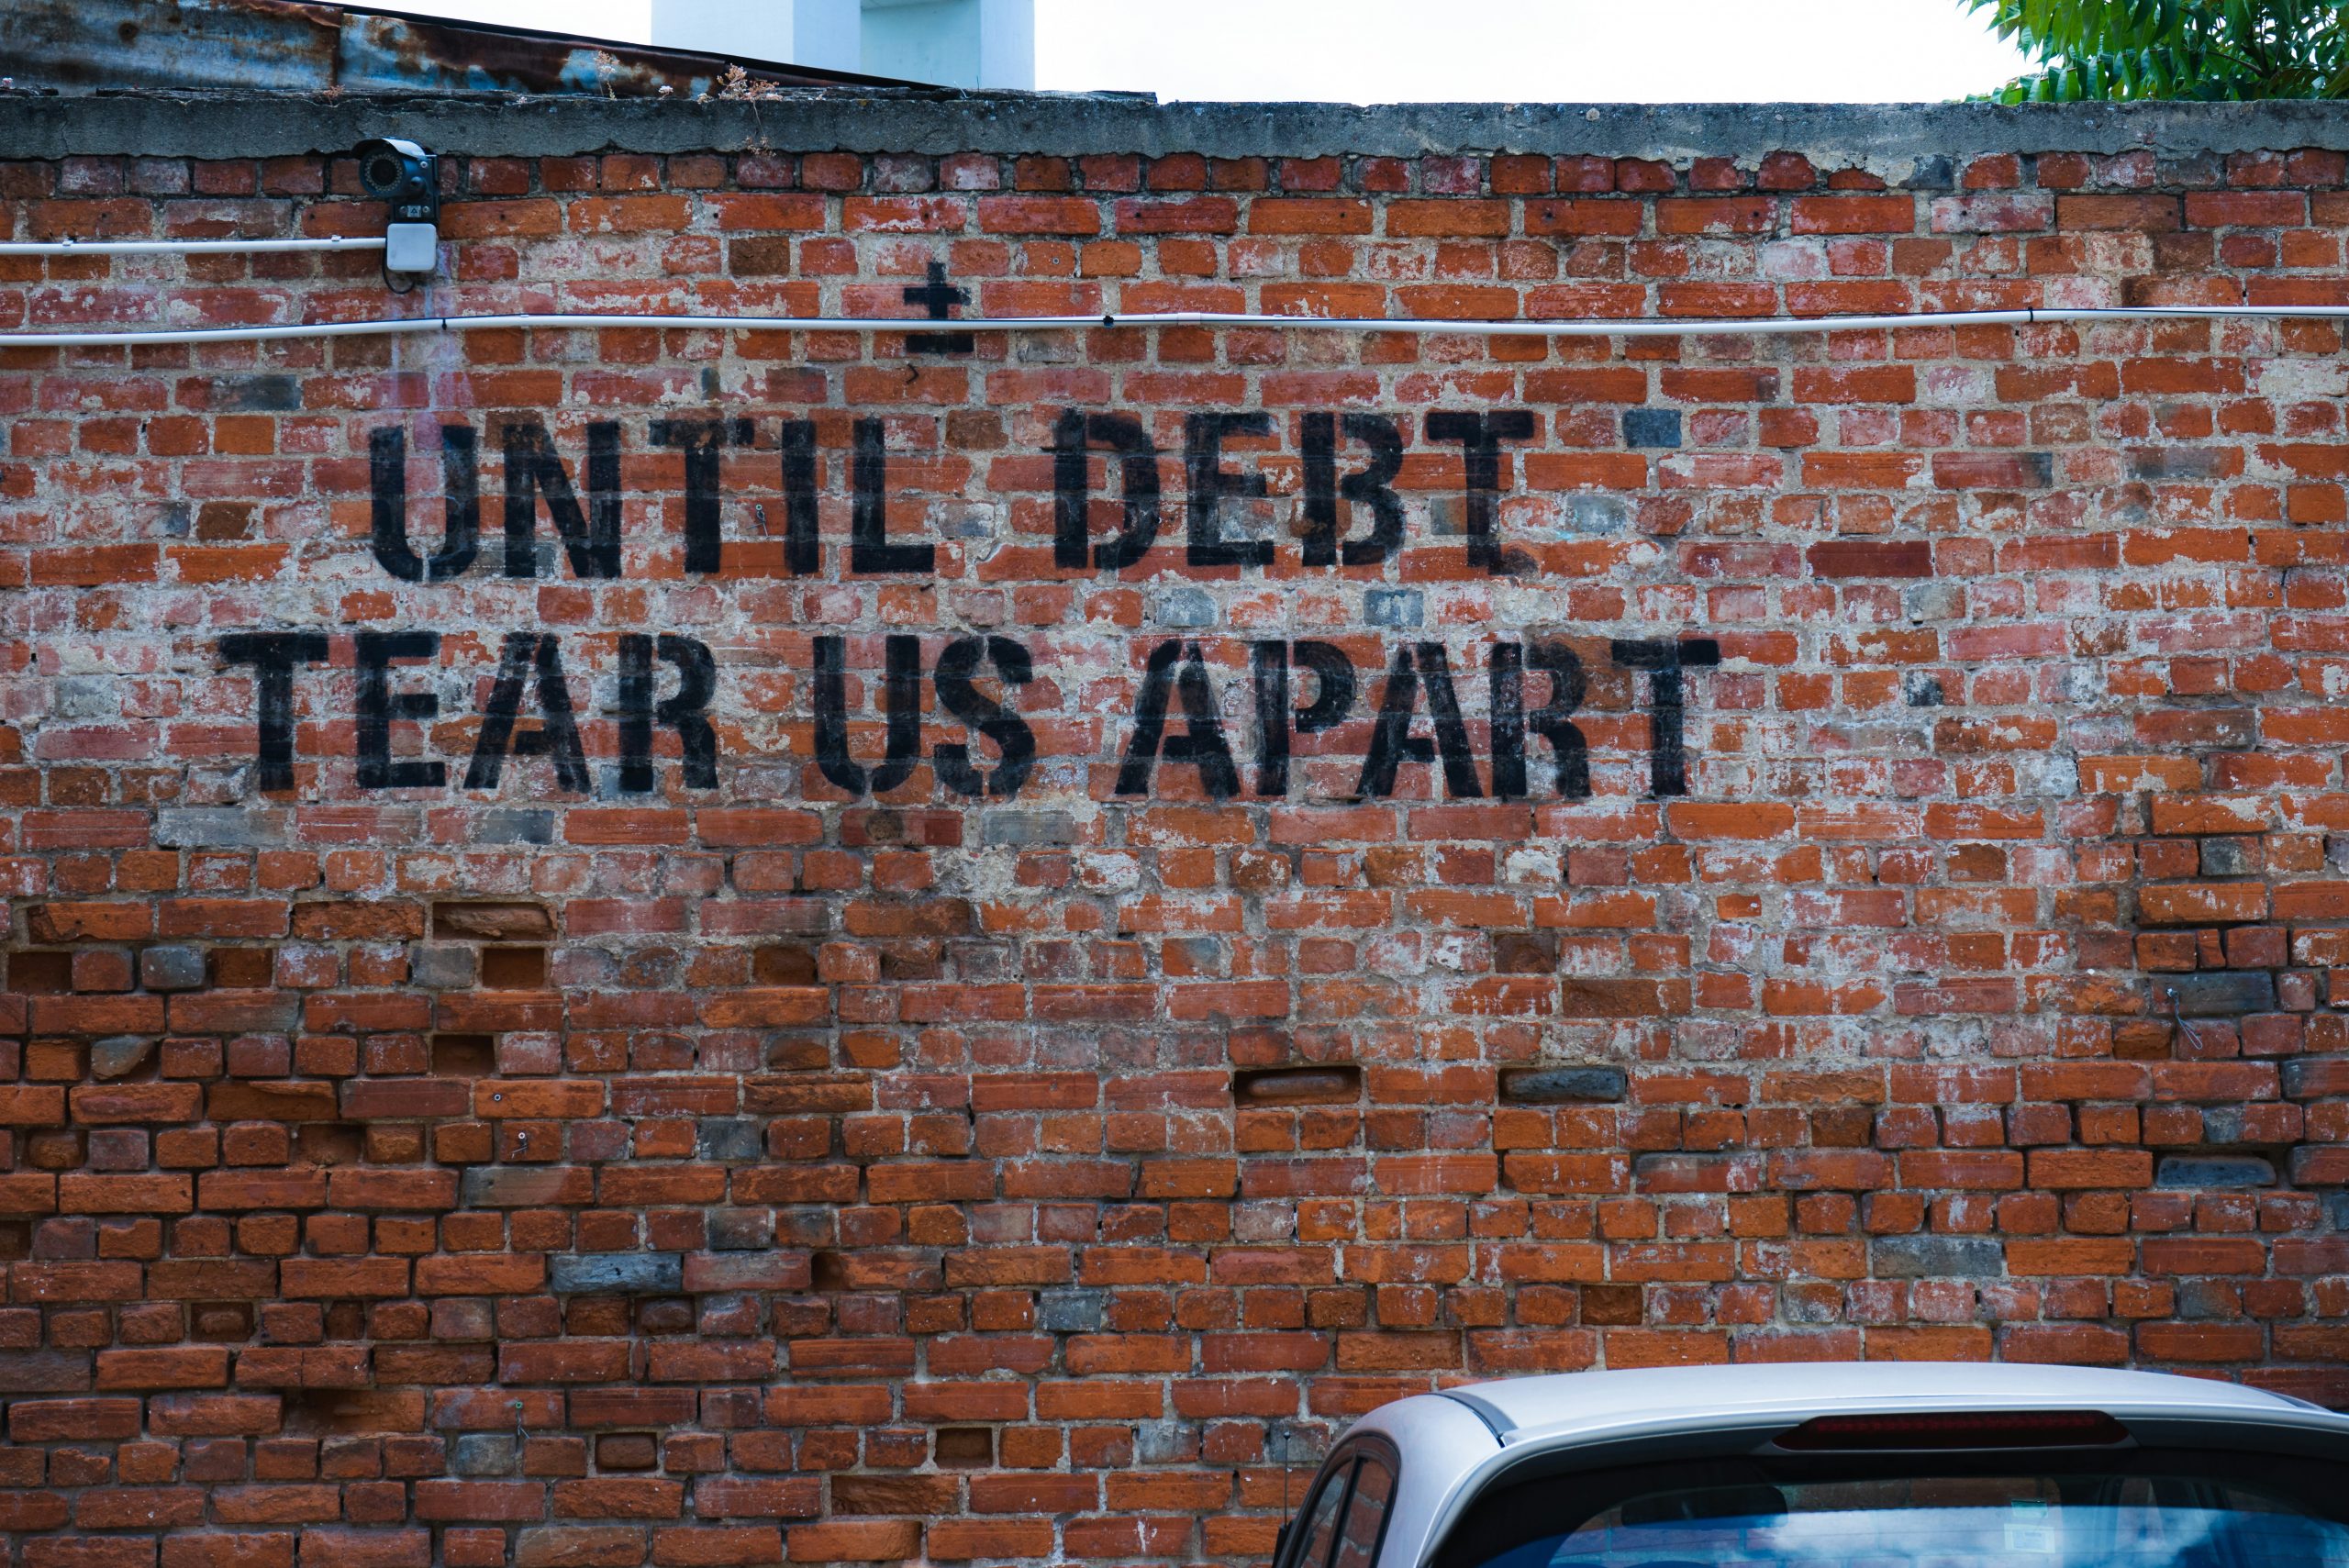 Brick wall with "Until debt tear us apart" written on it